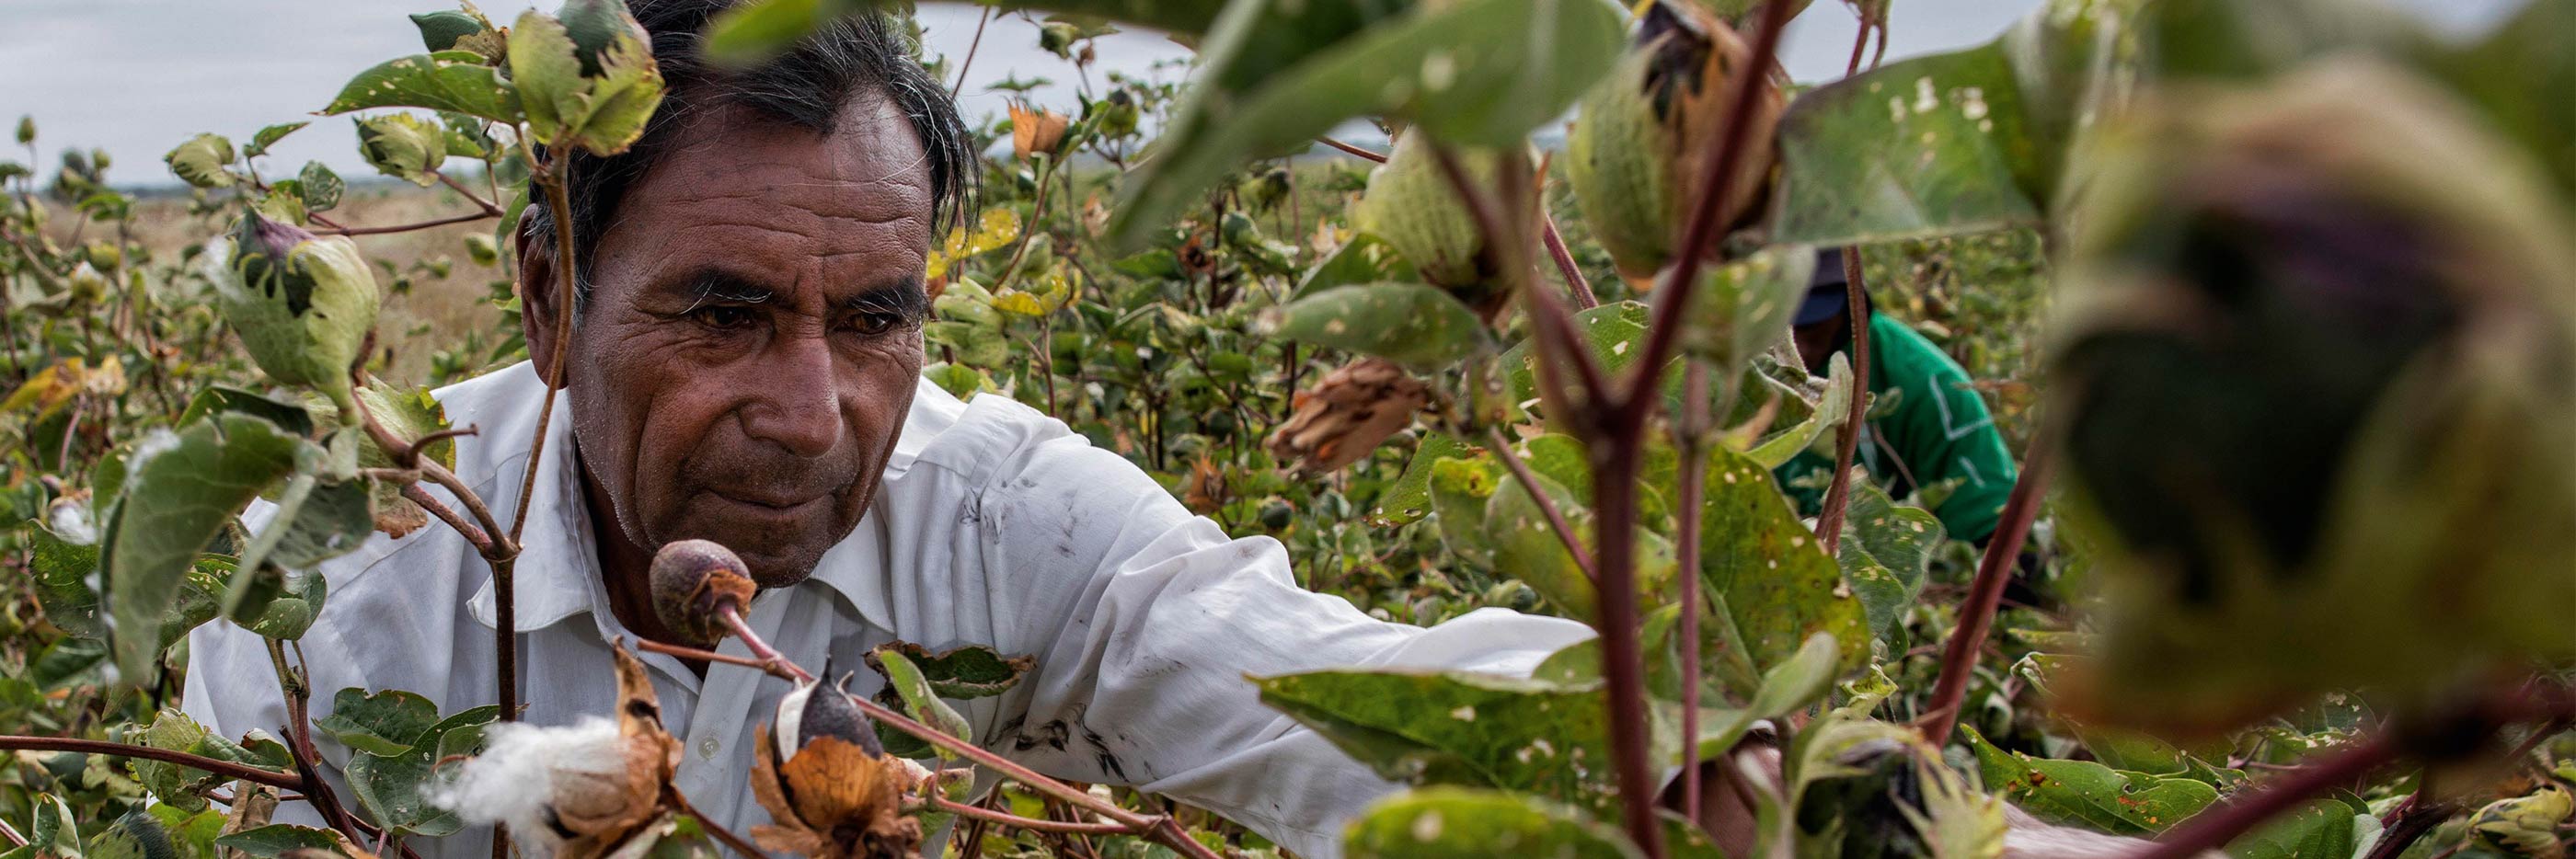 Cotton picker in Peru harvests the ripe cotton flowers | mey®